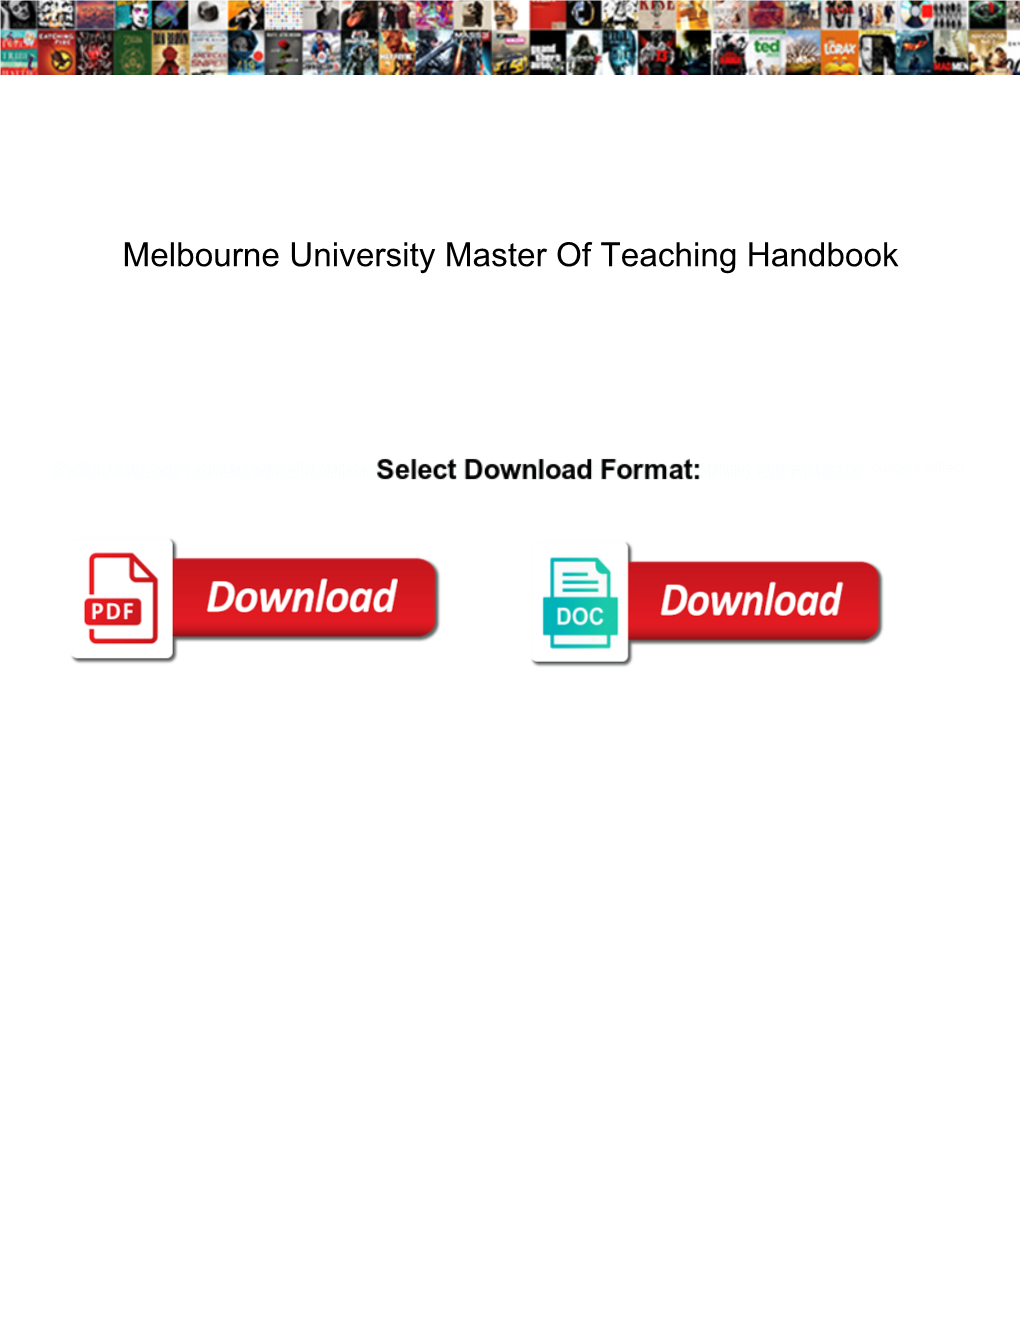 Melbourne University Master of Teaching Handbook